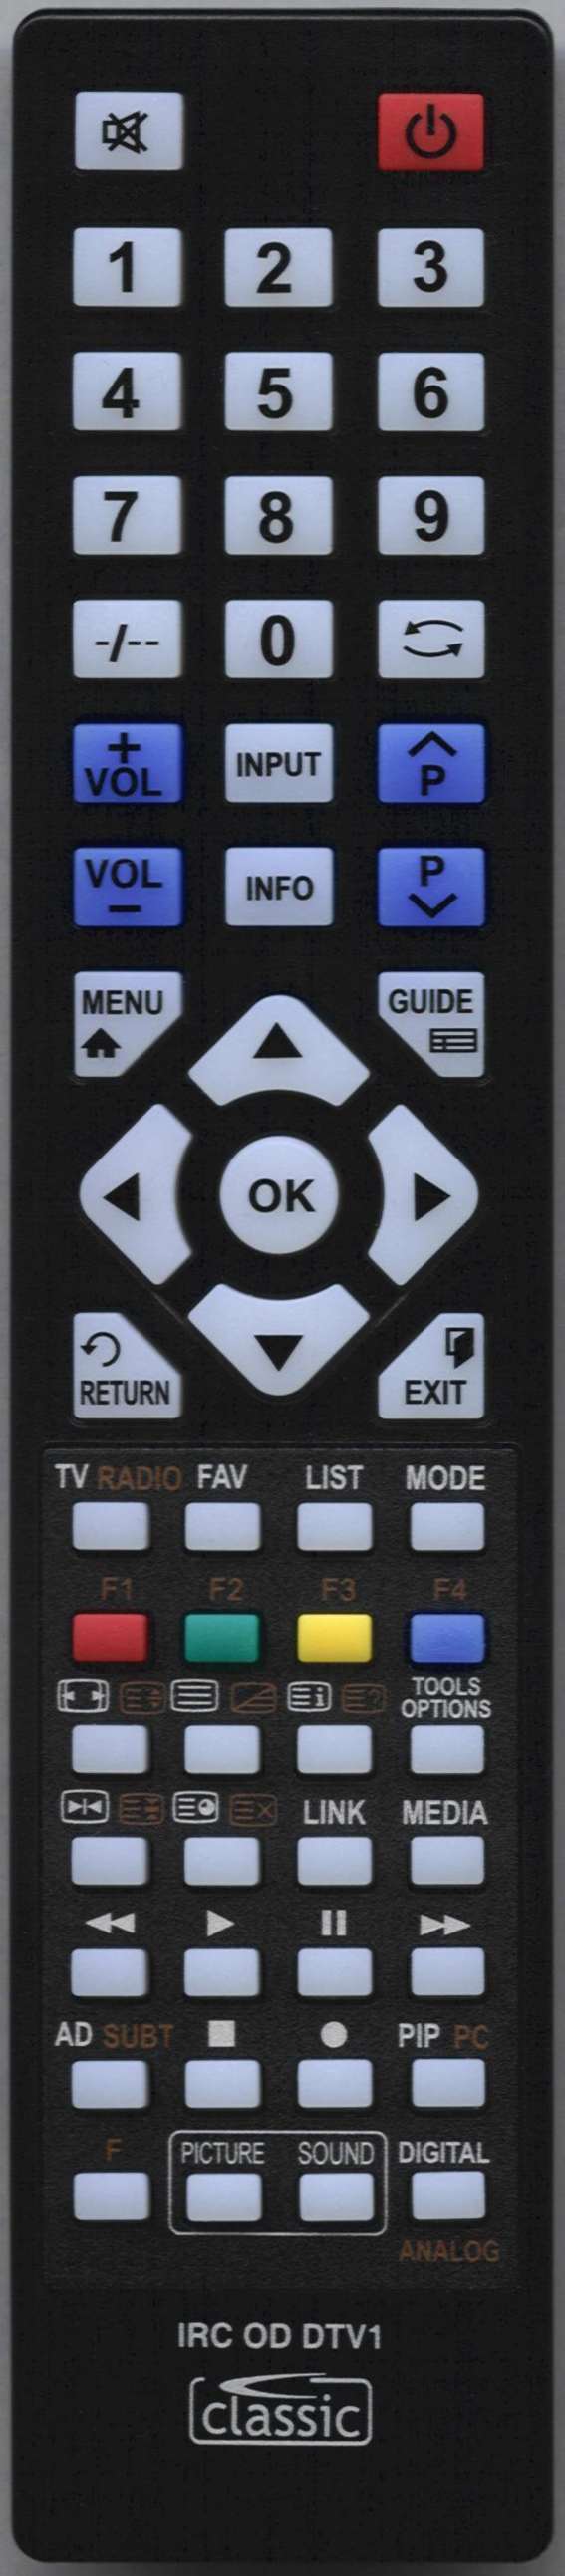 UMC E22/13B-GB-TCD-UK Remote Control Alternative